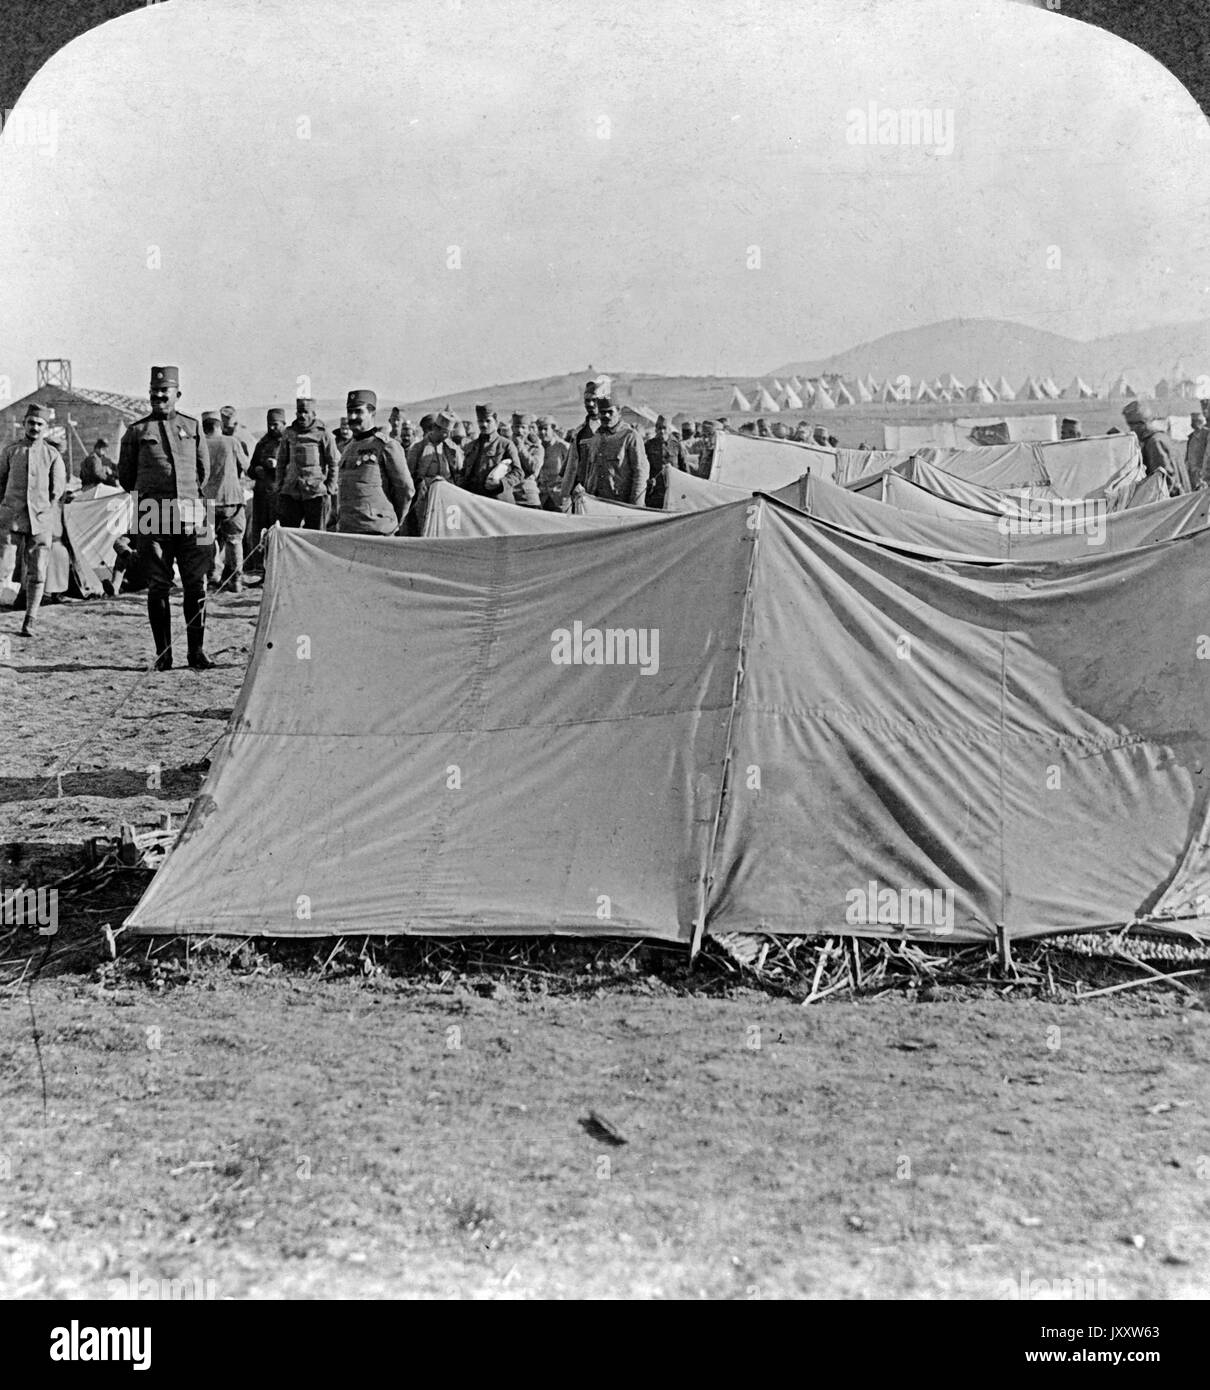 Gesamtansicht eines serbischen Lagers an der Balkan front 1916. General view of a Serbian camp on the Balkan front, 1916. Stock Photo